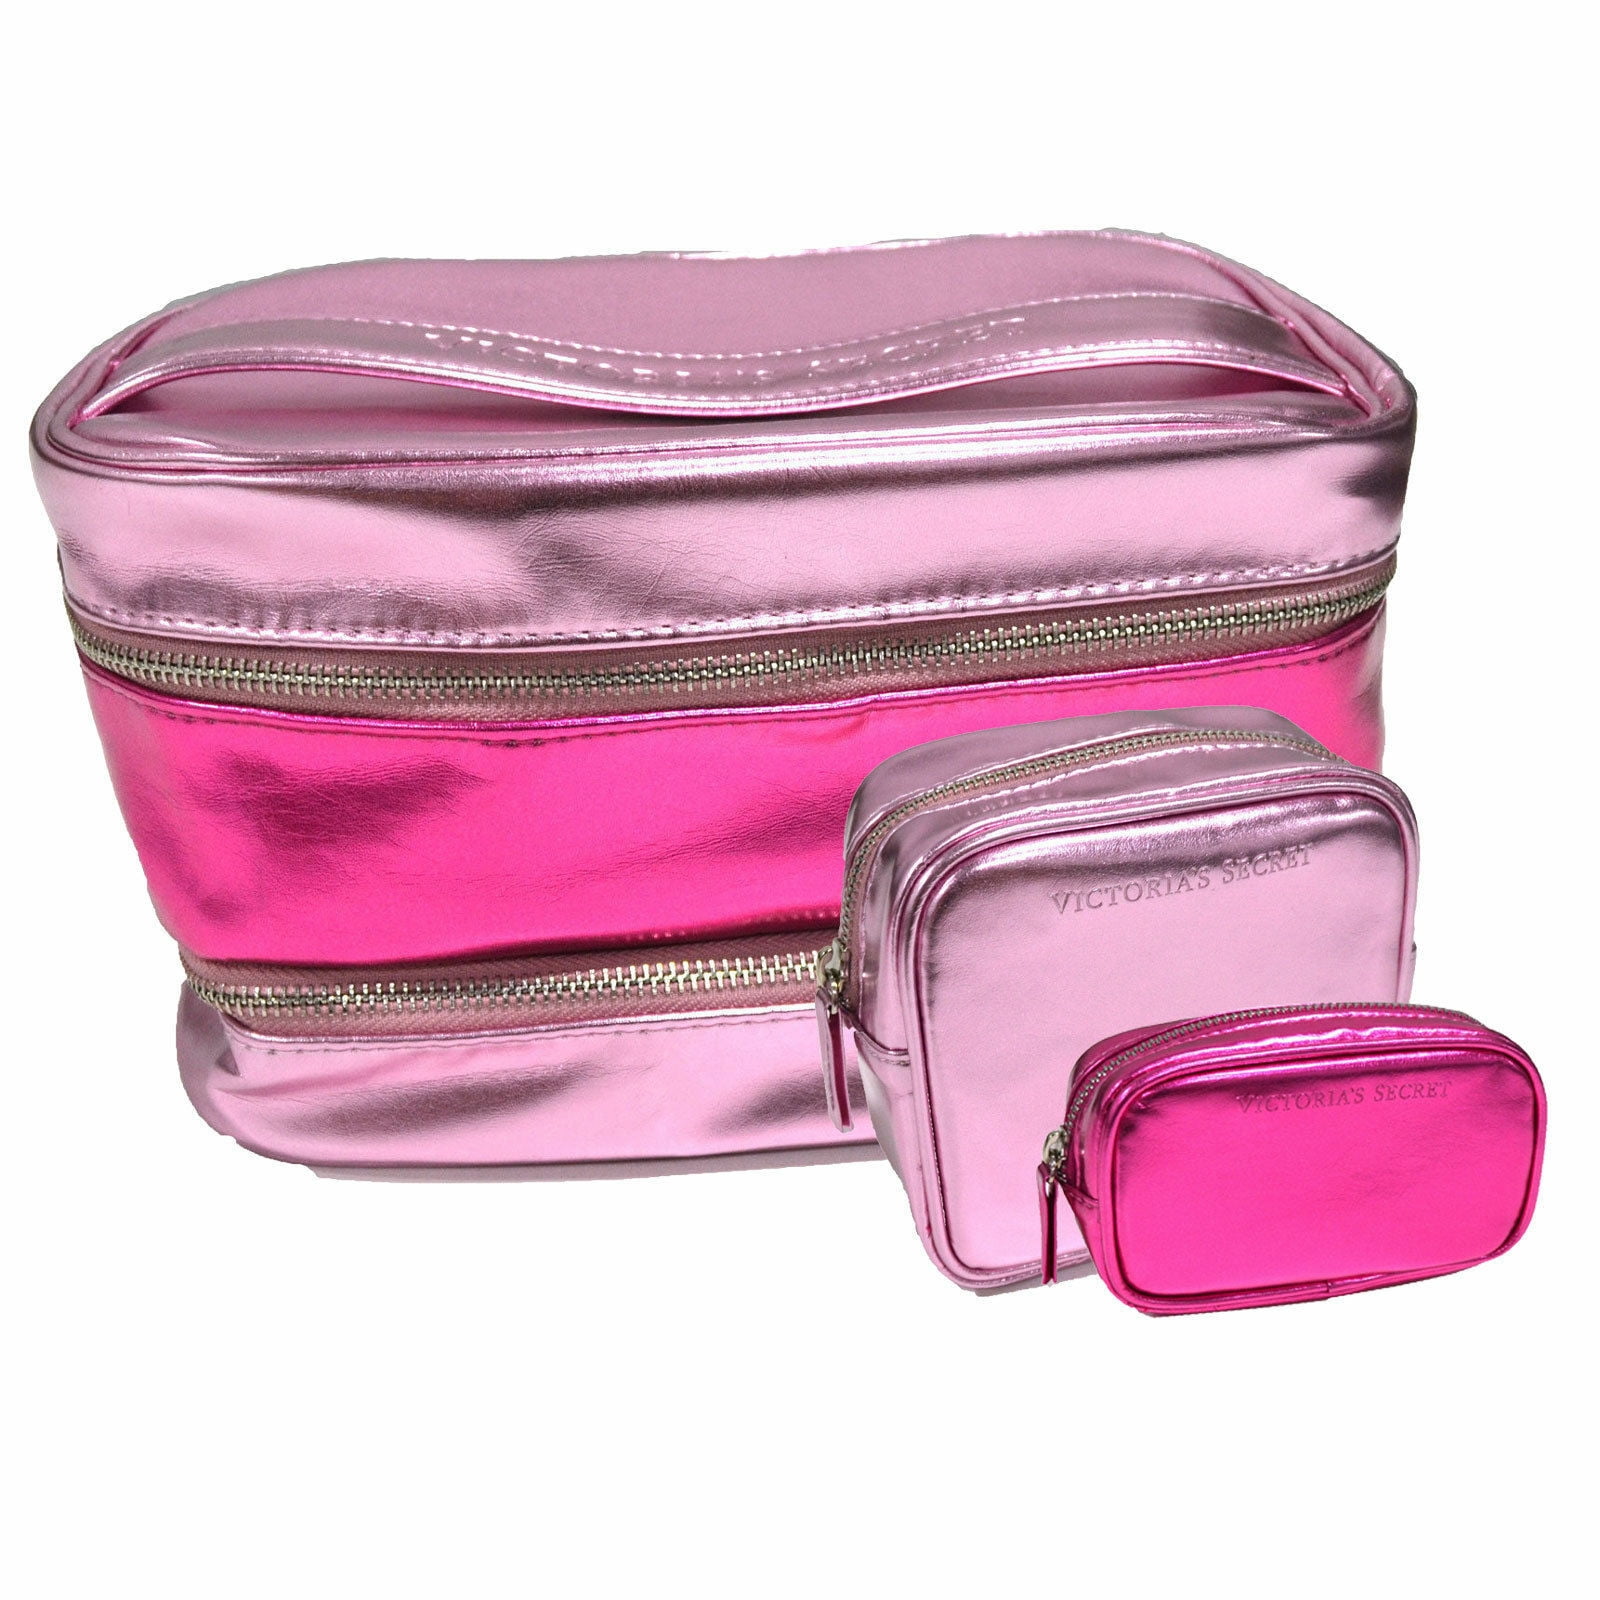 victoria secret pink travel bag